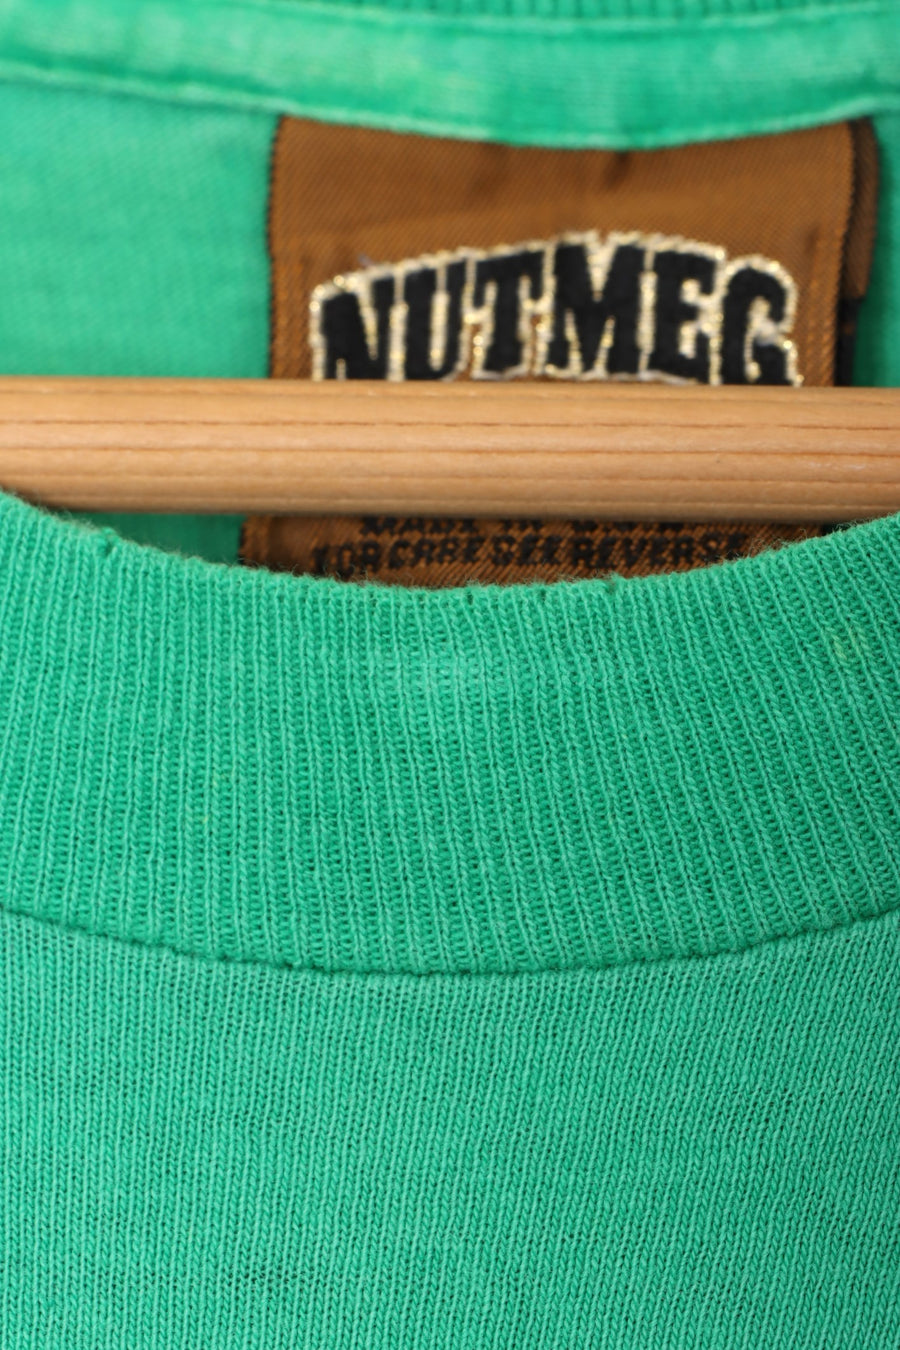 NFL 1994 Philadelphia Eagles NUTMEG Single Stitch T-Shirt USA Made (L)